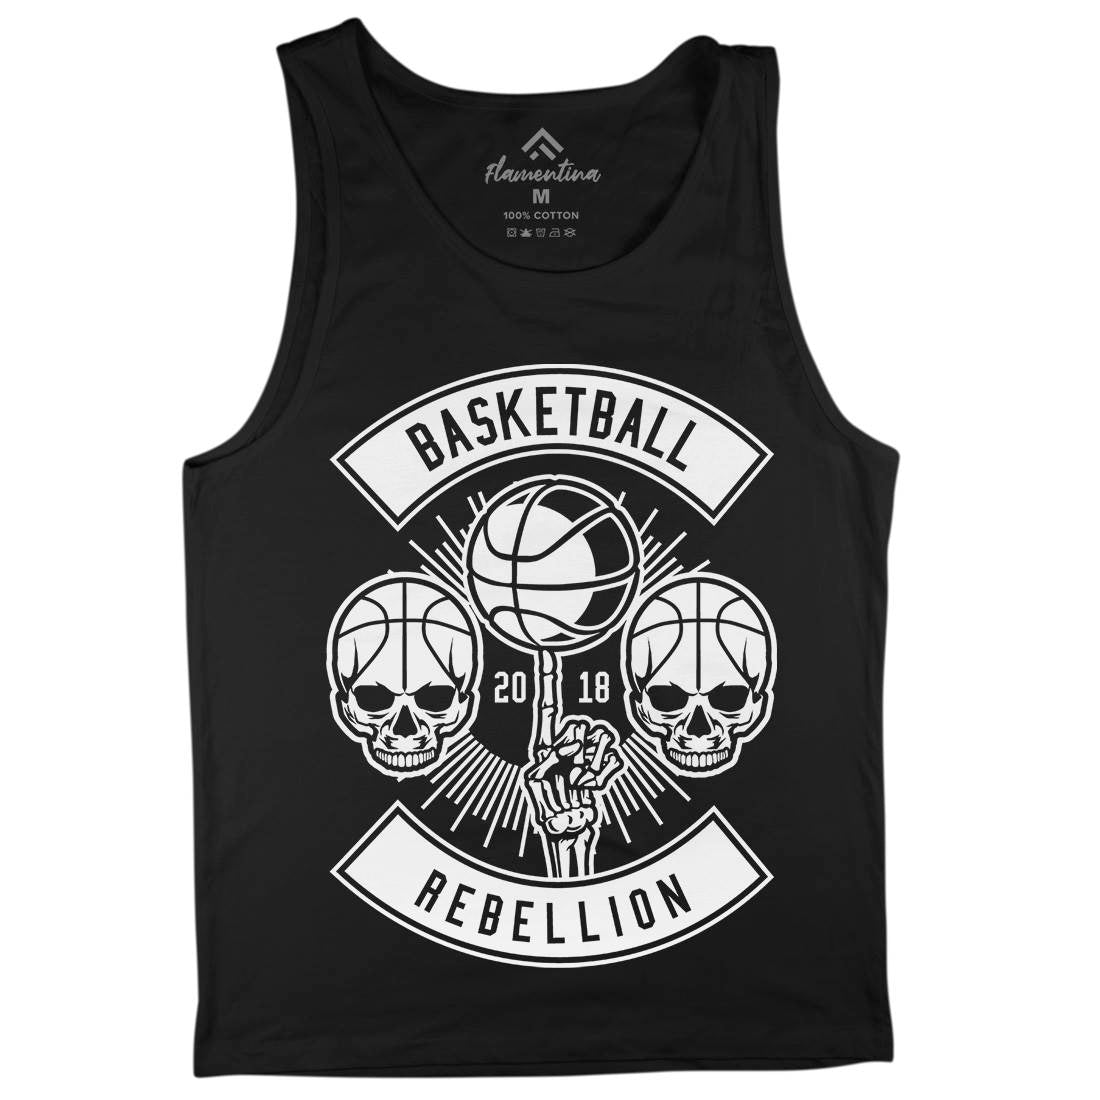 Basketball Rebellion Mens Tank Top Vest Sport B492